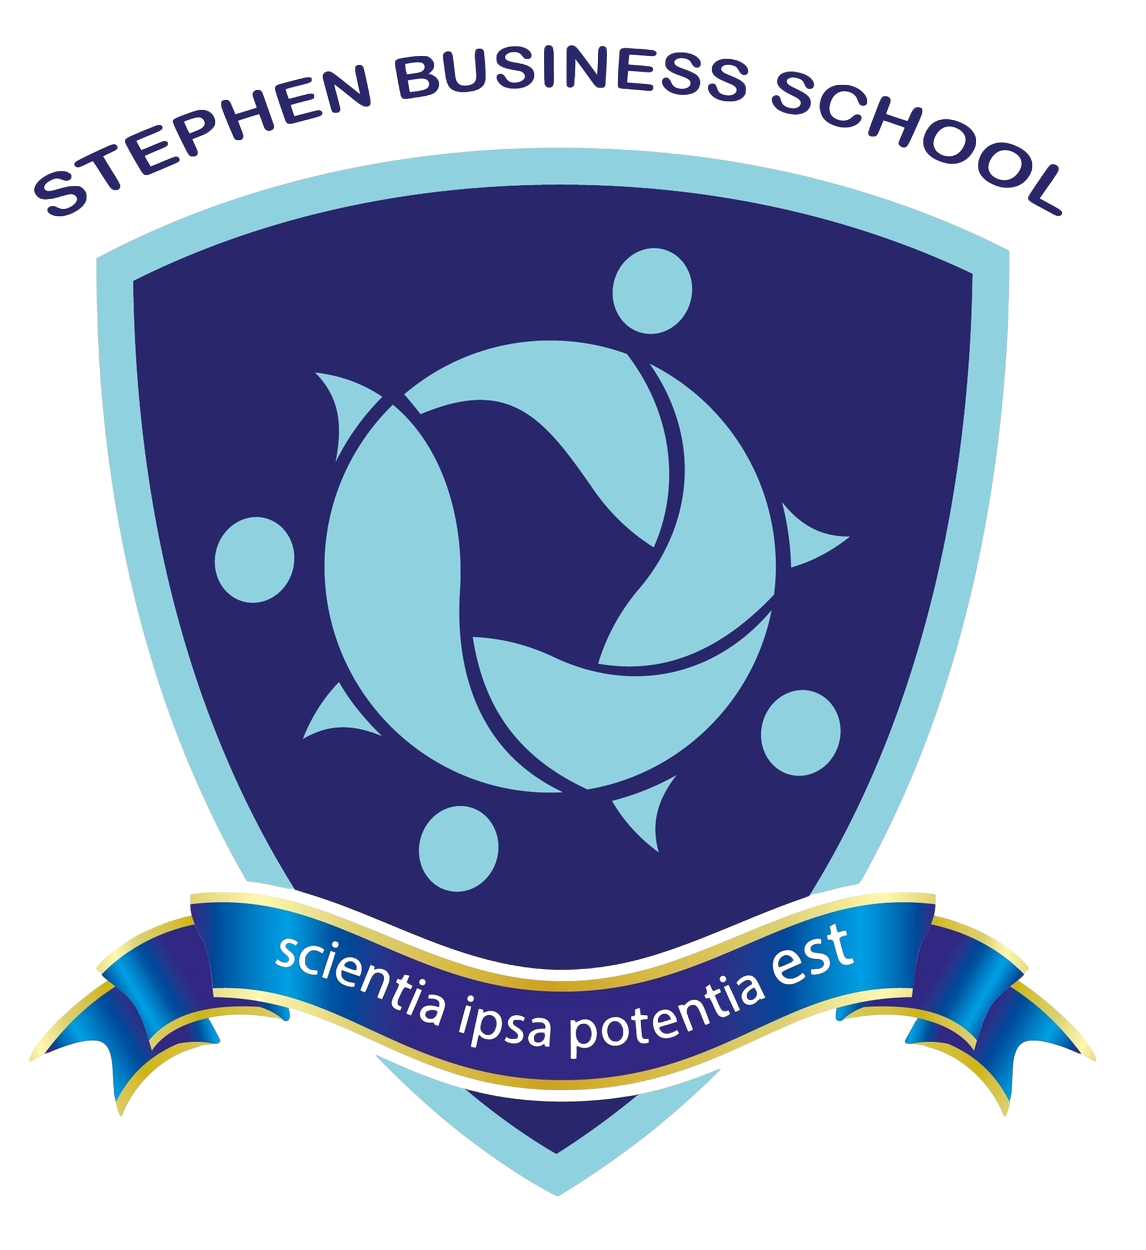 Stephens Business School Logo